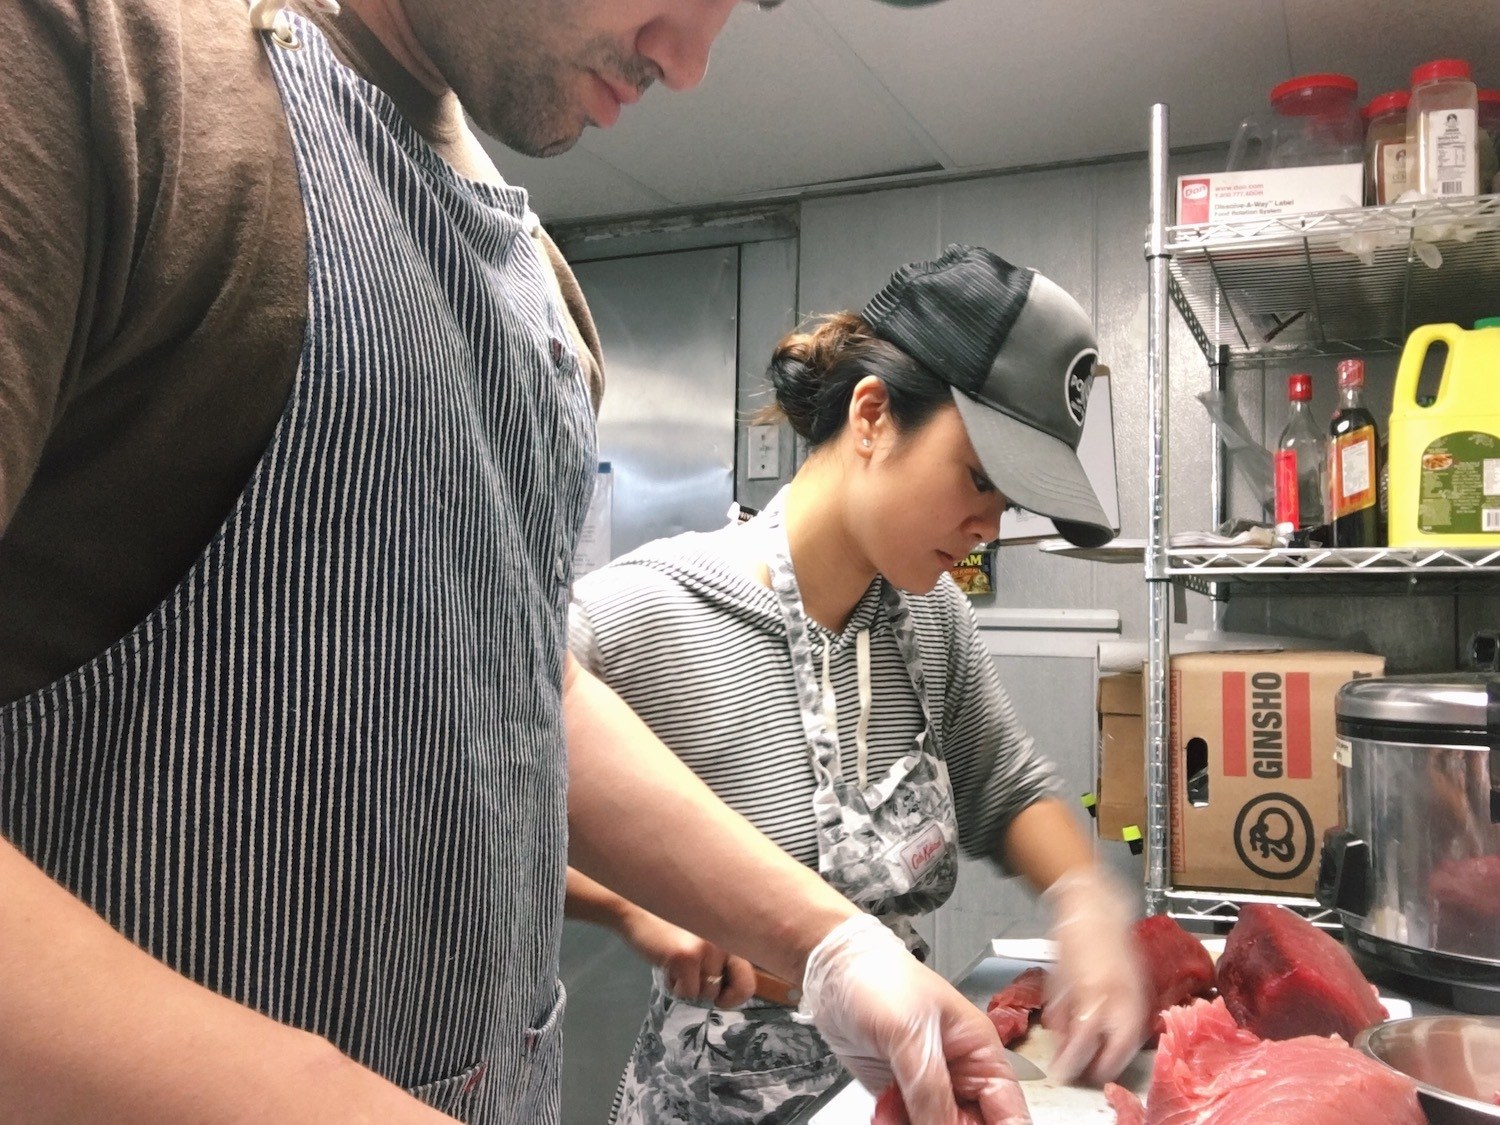 Kiki Aranita cutting tuna in her restaurant which closed during Covid. July 2021